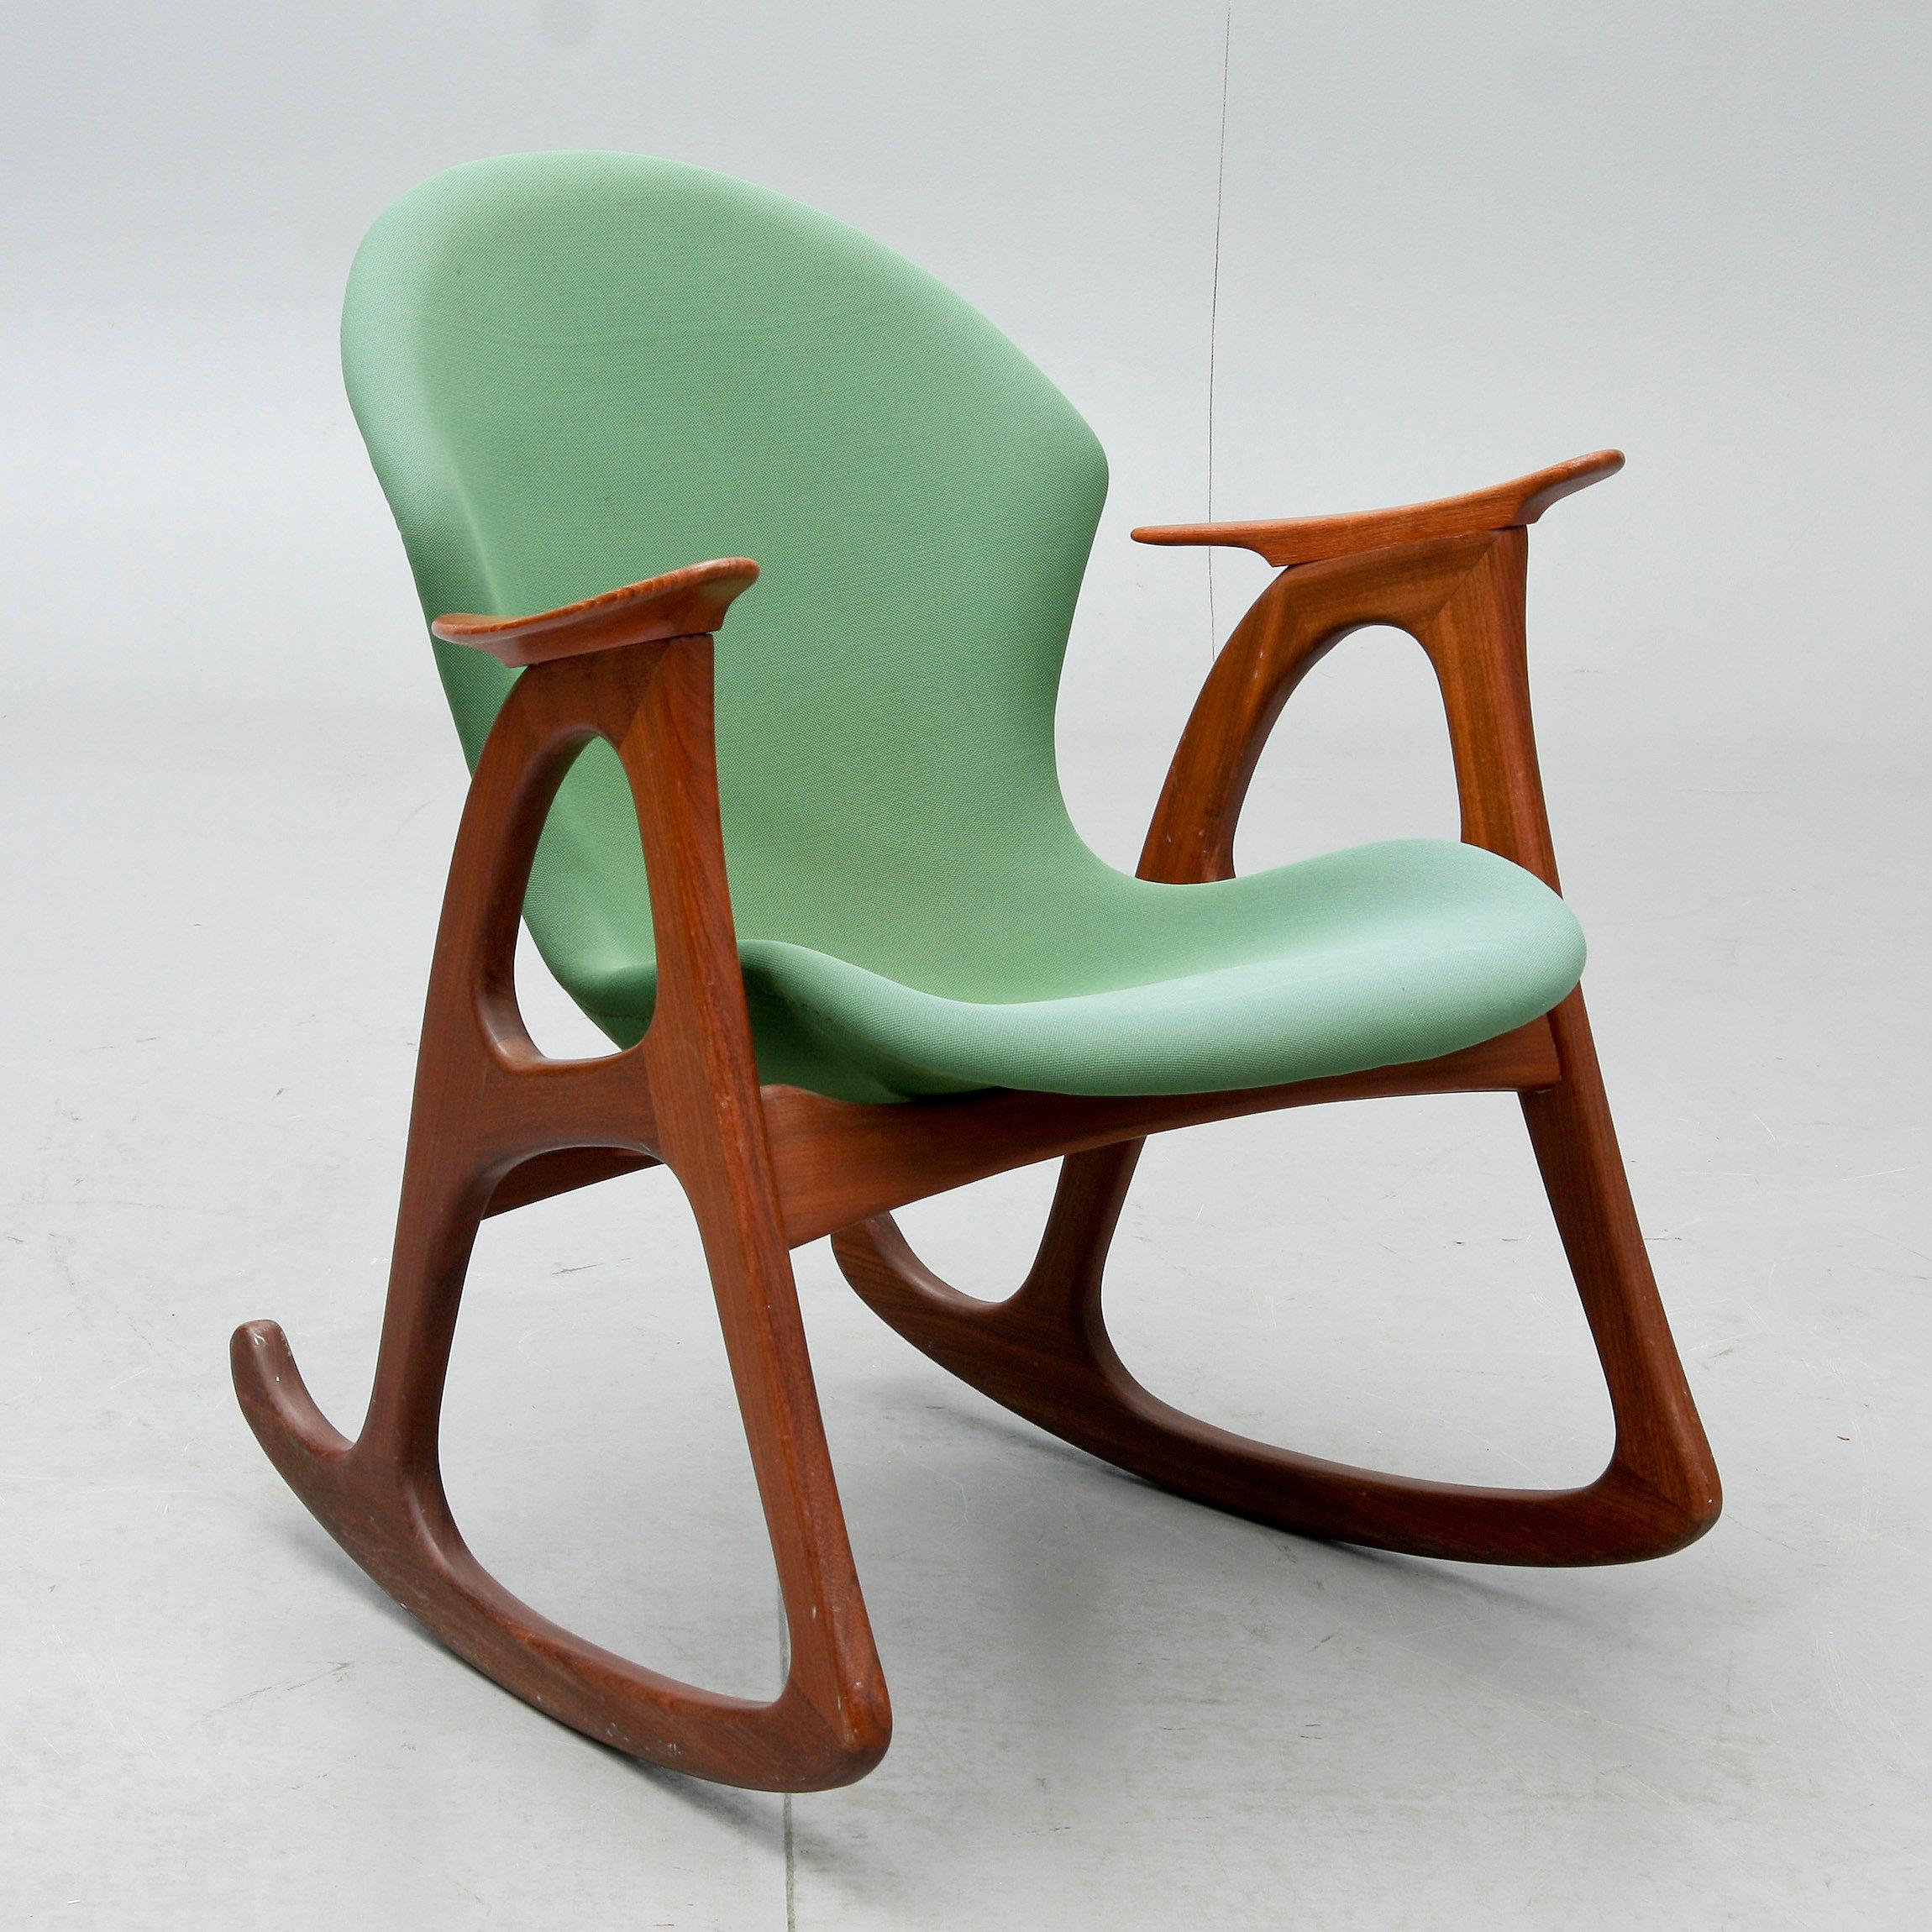 Aage Christiansen swivel chair. Erhardsen & Andersen Denmark 1960s
Teak wood Frame in good condition. Upholstered in its original green fabric
Good overall condition.

